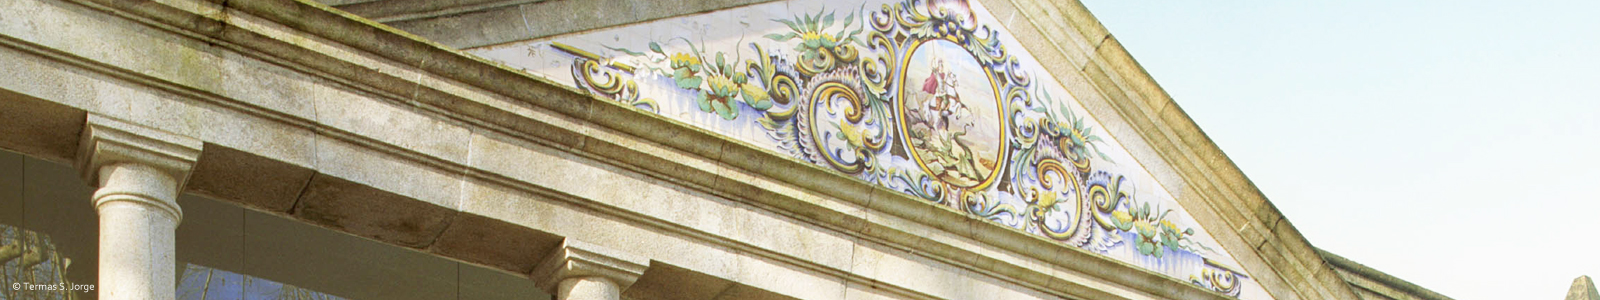 termas-sao-jorge-fachada-centenaria-azulejos